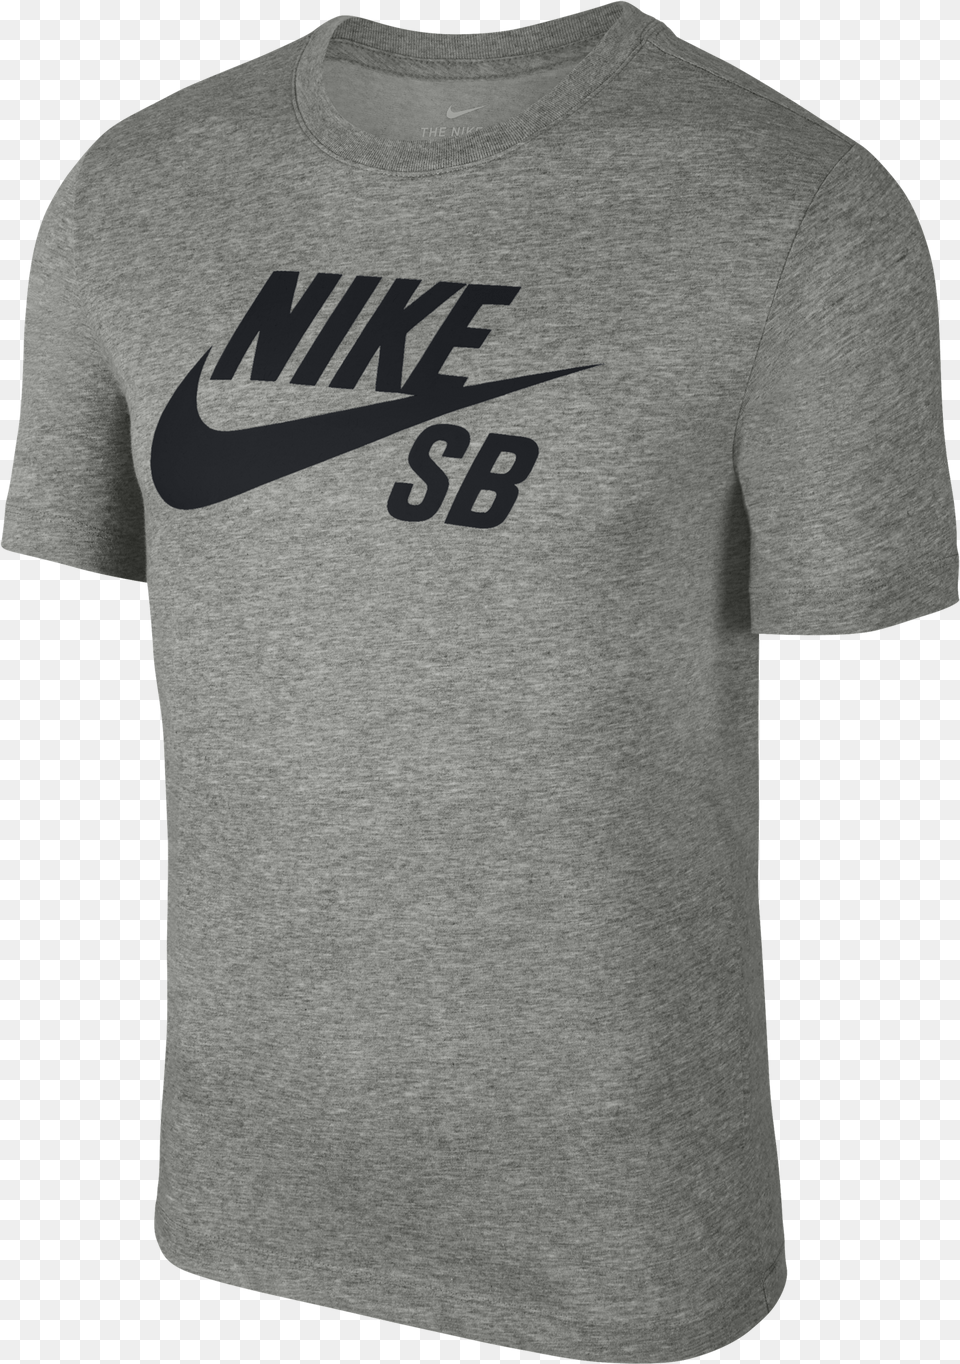 Nike Sb Logo, Clothing, Shirt, T-shirt Free Transparent Png